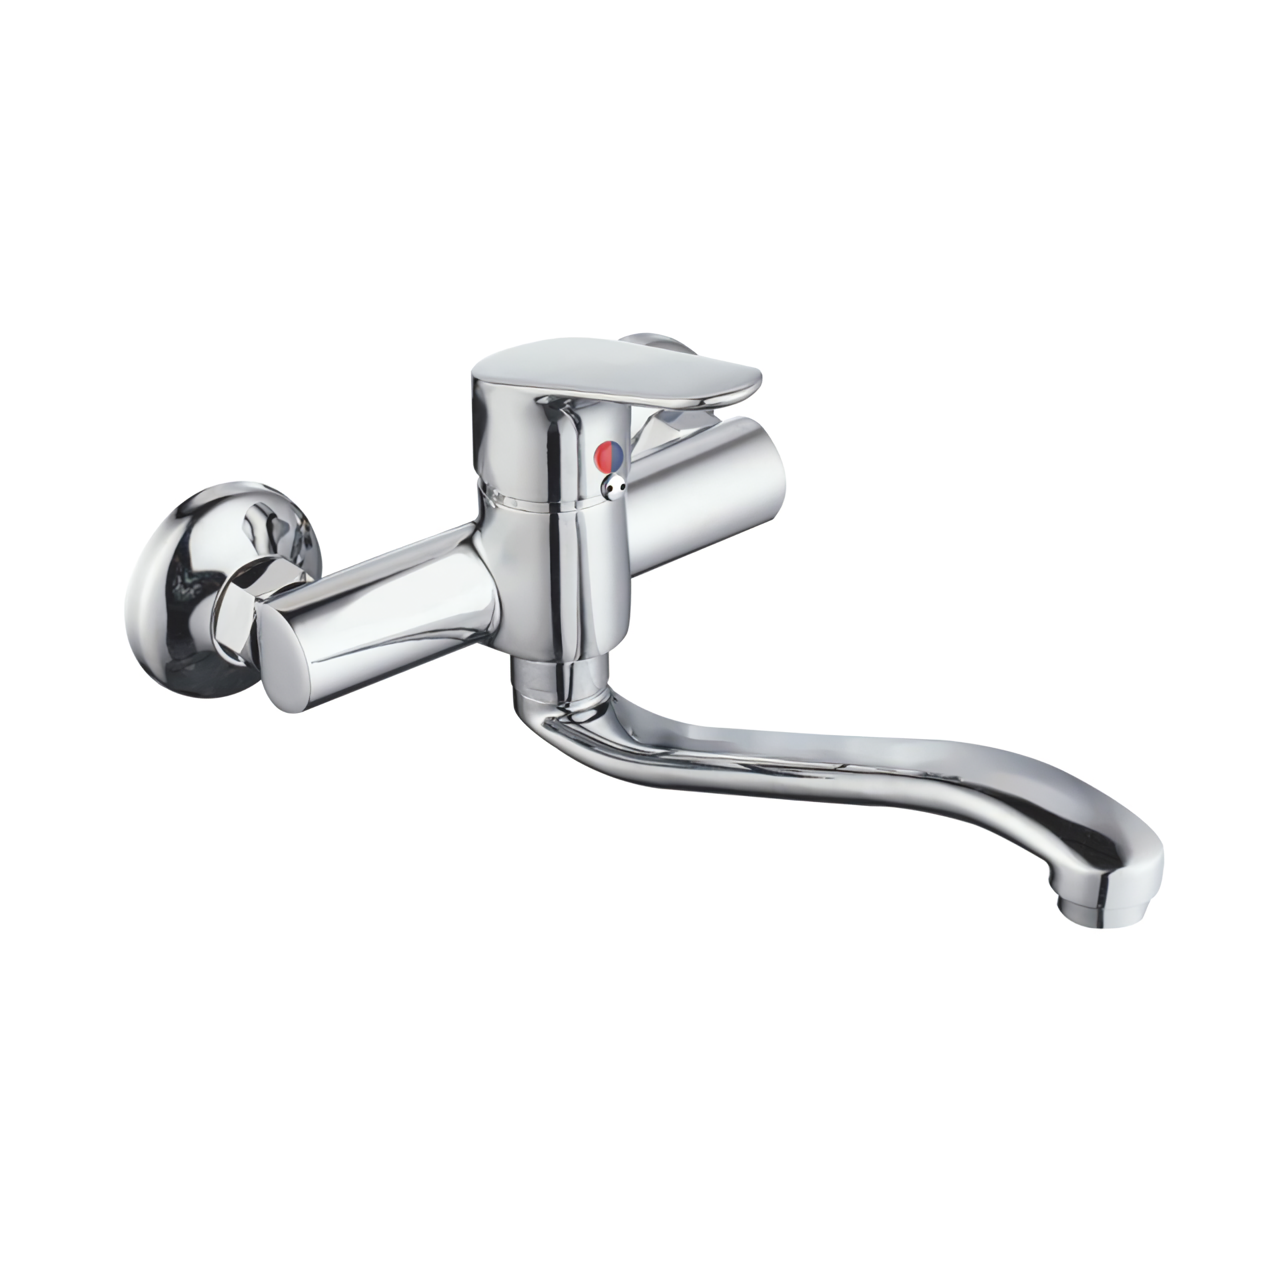 OJ-J2446H External Shower Mixer Faucet Shower Mixer Single Handle Faucet Wall Mounted Bath Shower Valve Mixer Tap Zinc Alloy Shower Faucet